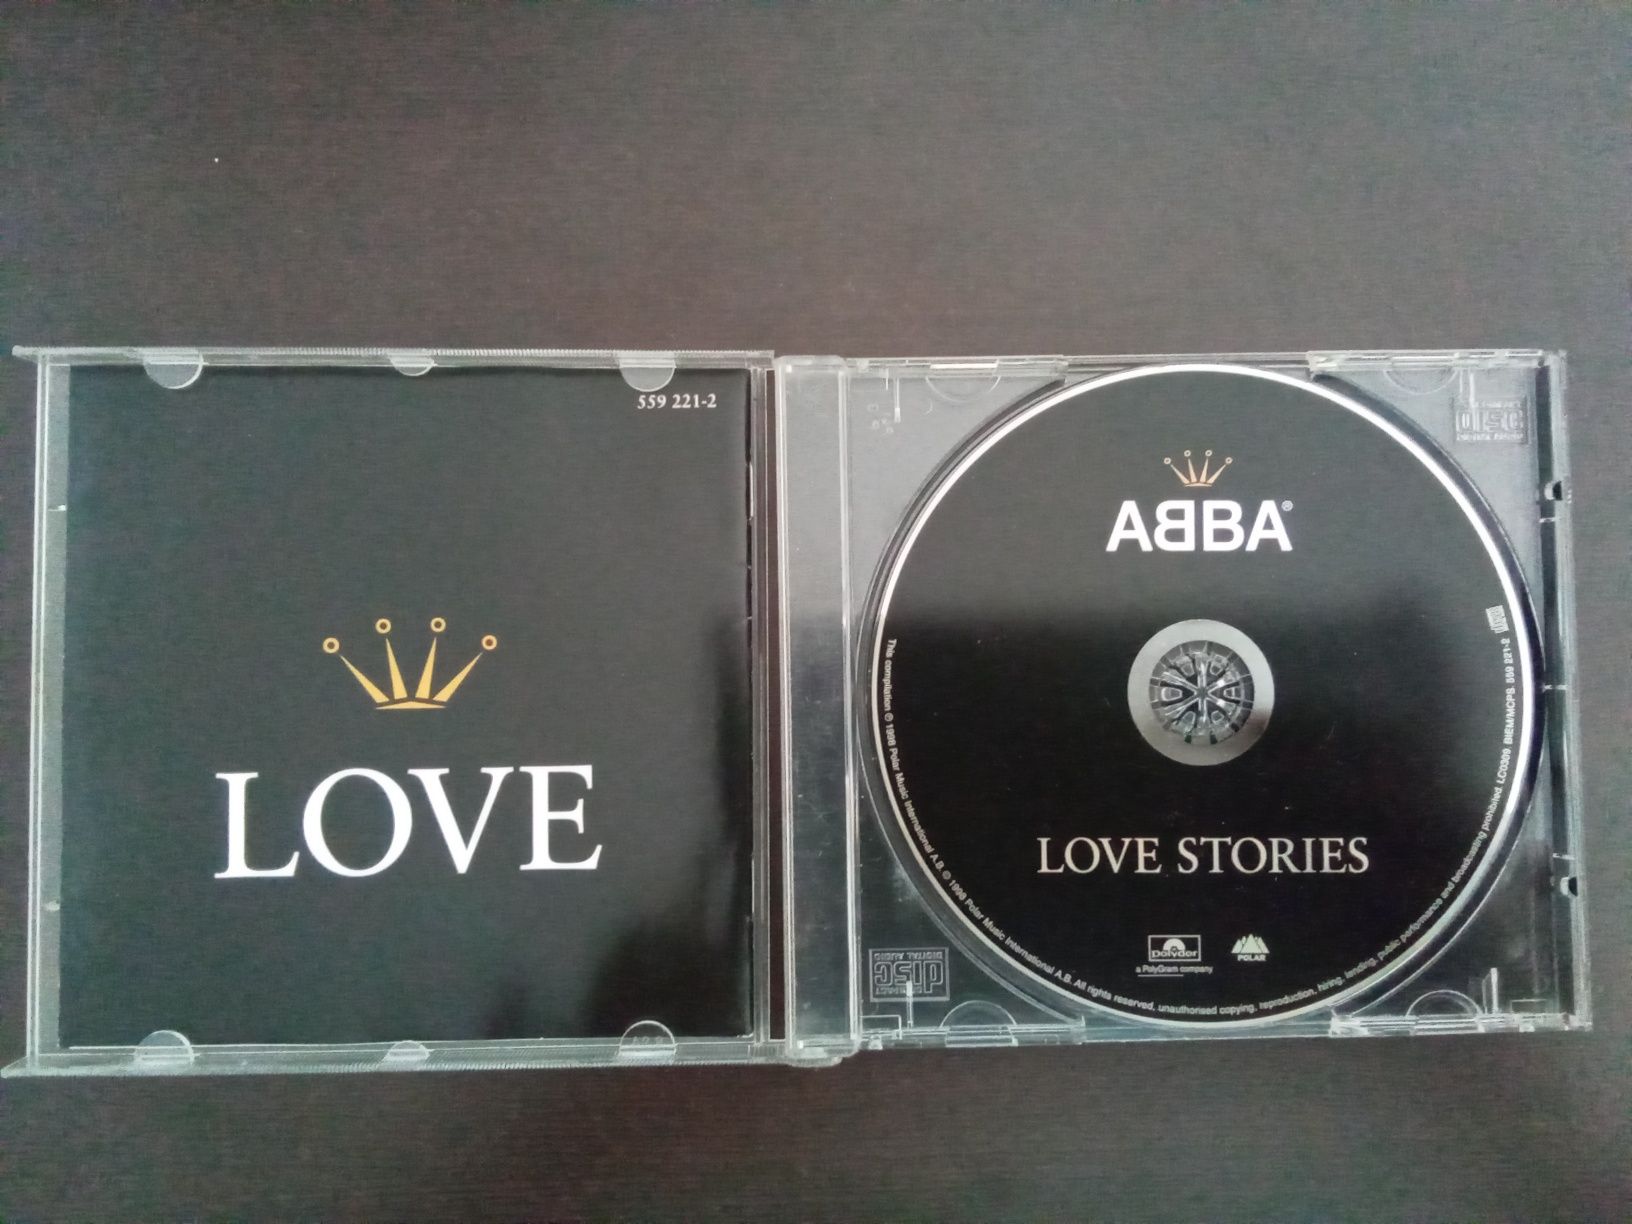 ABBA love stories